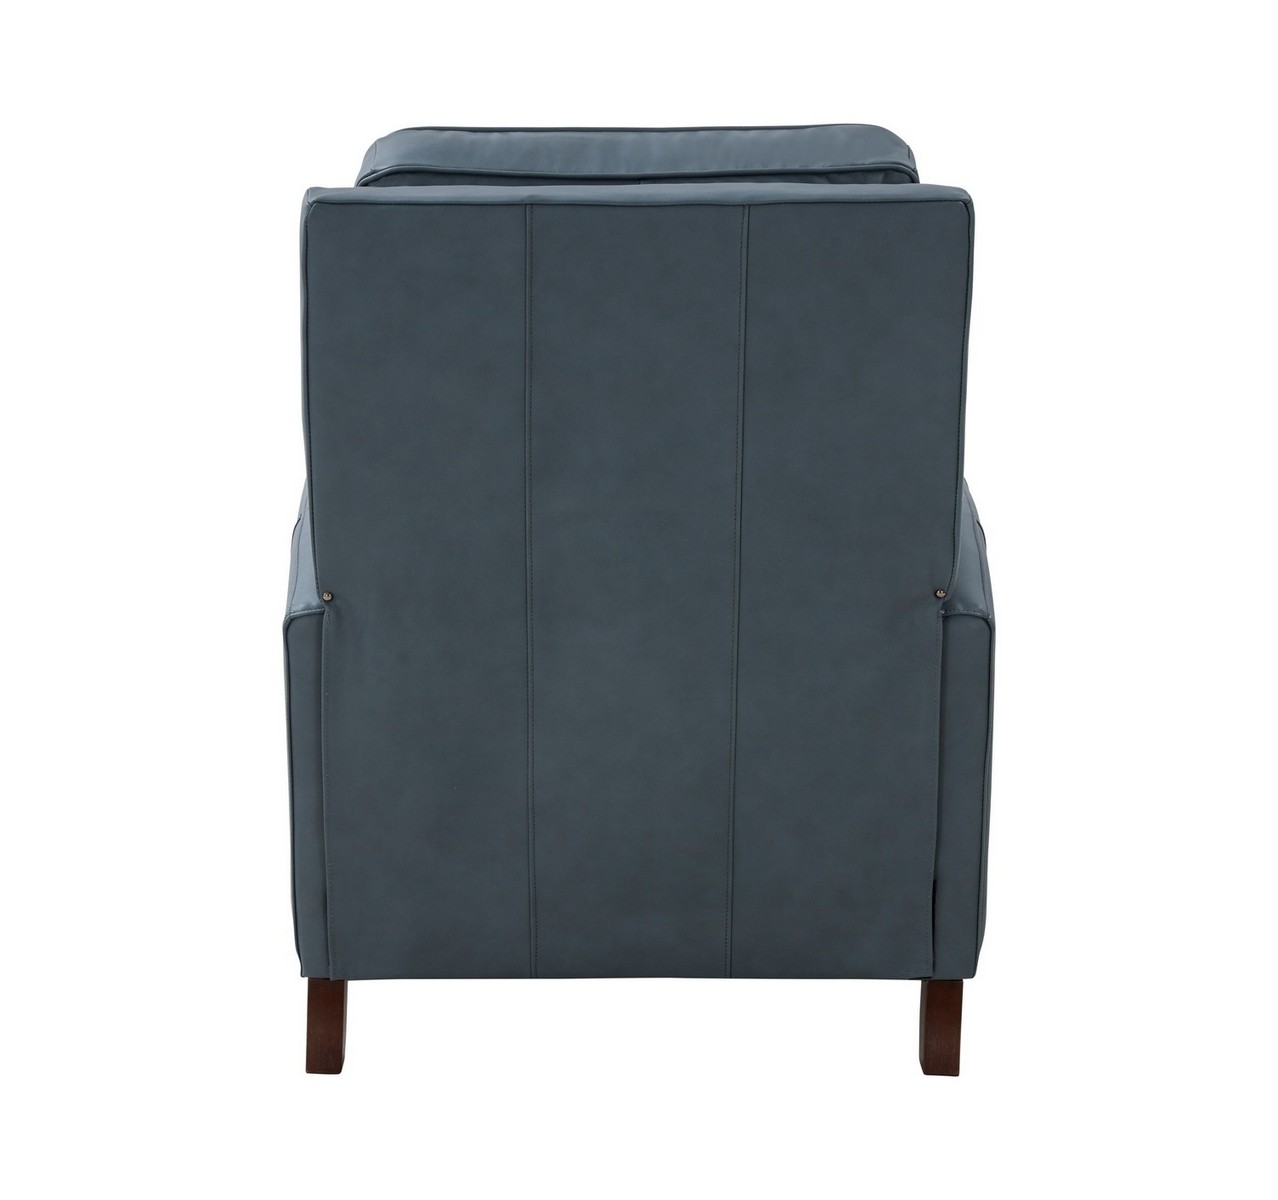 Barcalounger Melrose Recliner Chair - Corbett Steel Gray/All Leather